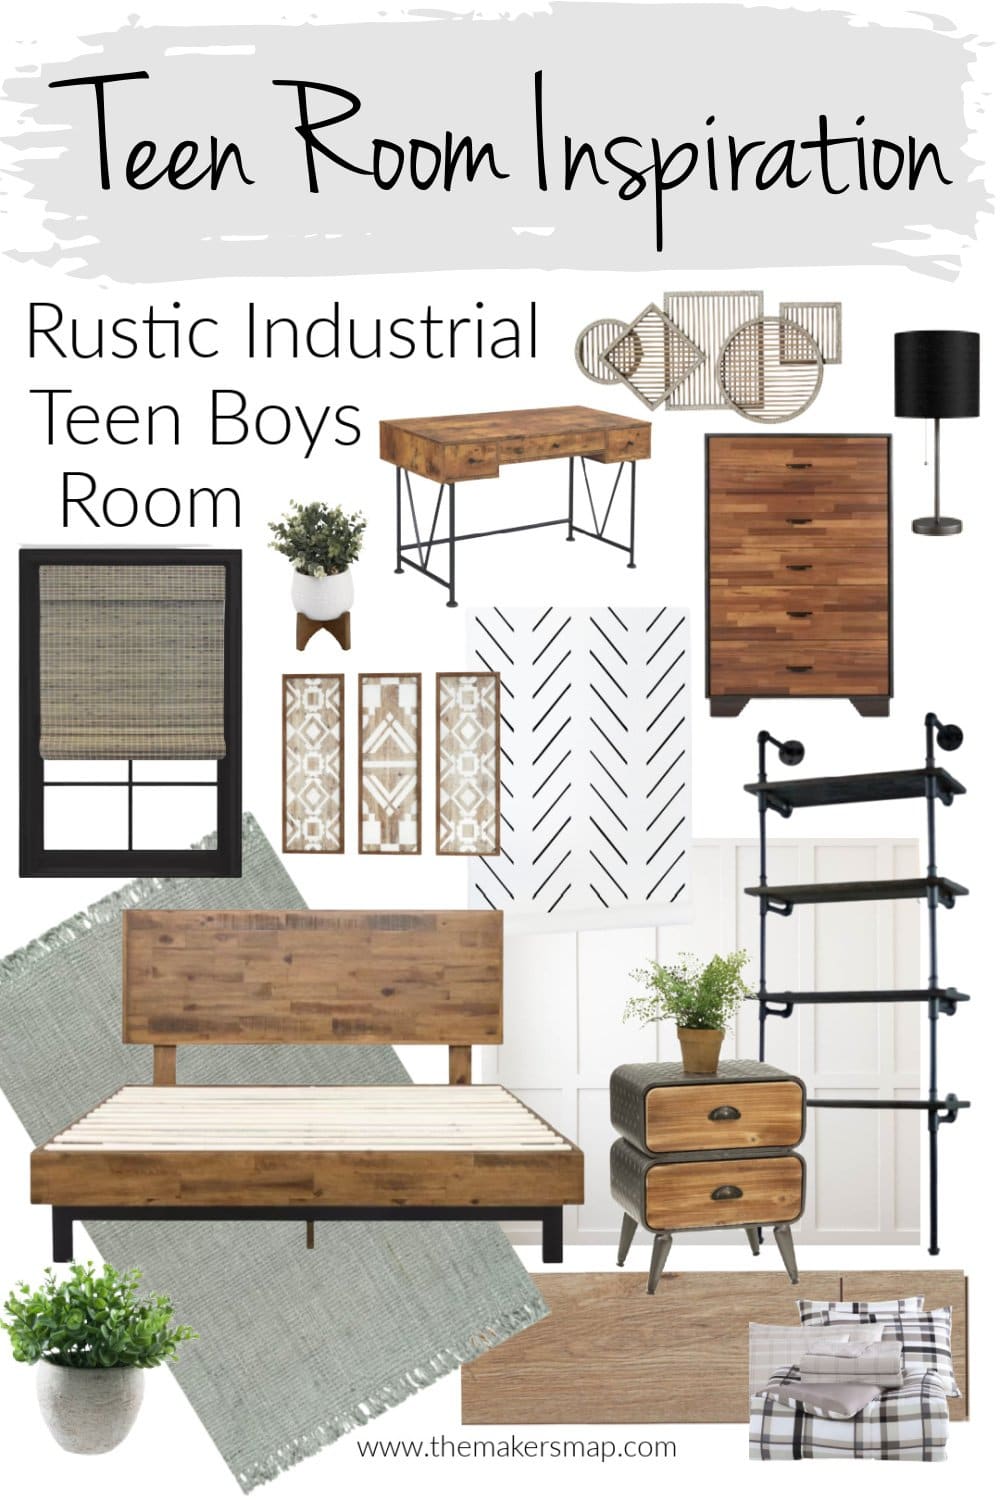 Teen Boy Rustic Industrial Room Inspiration